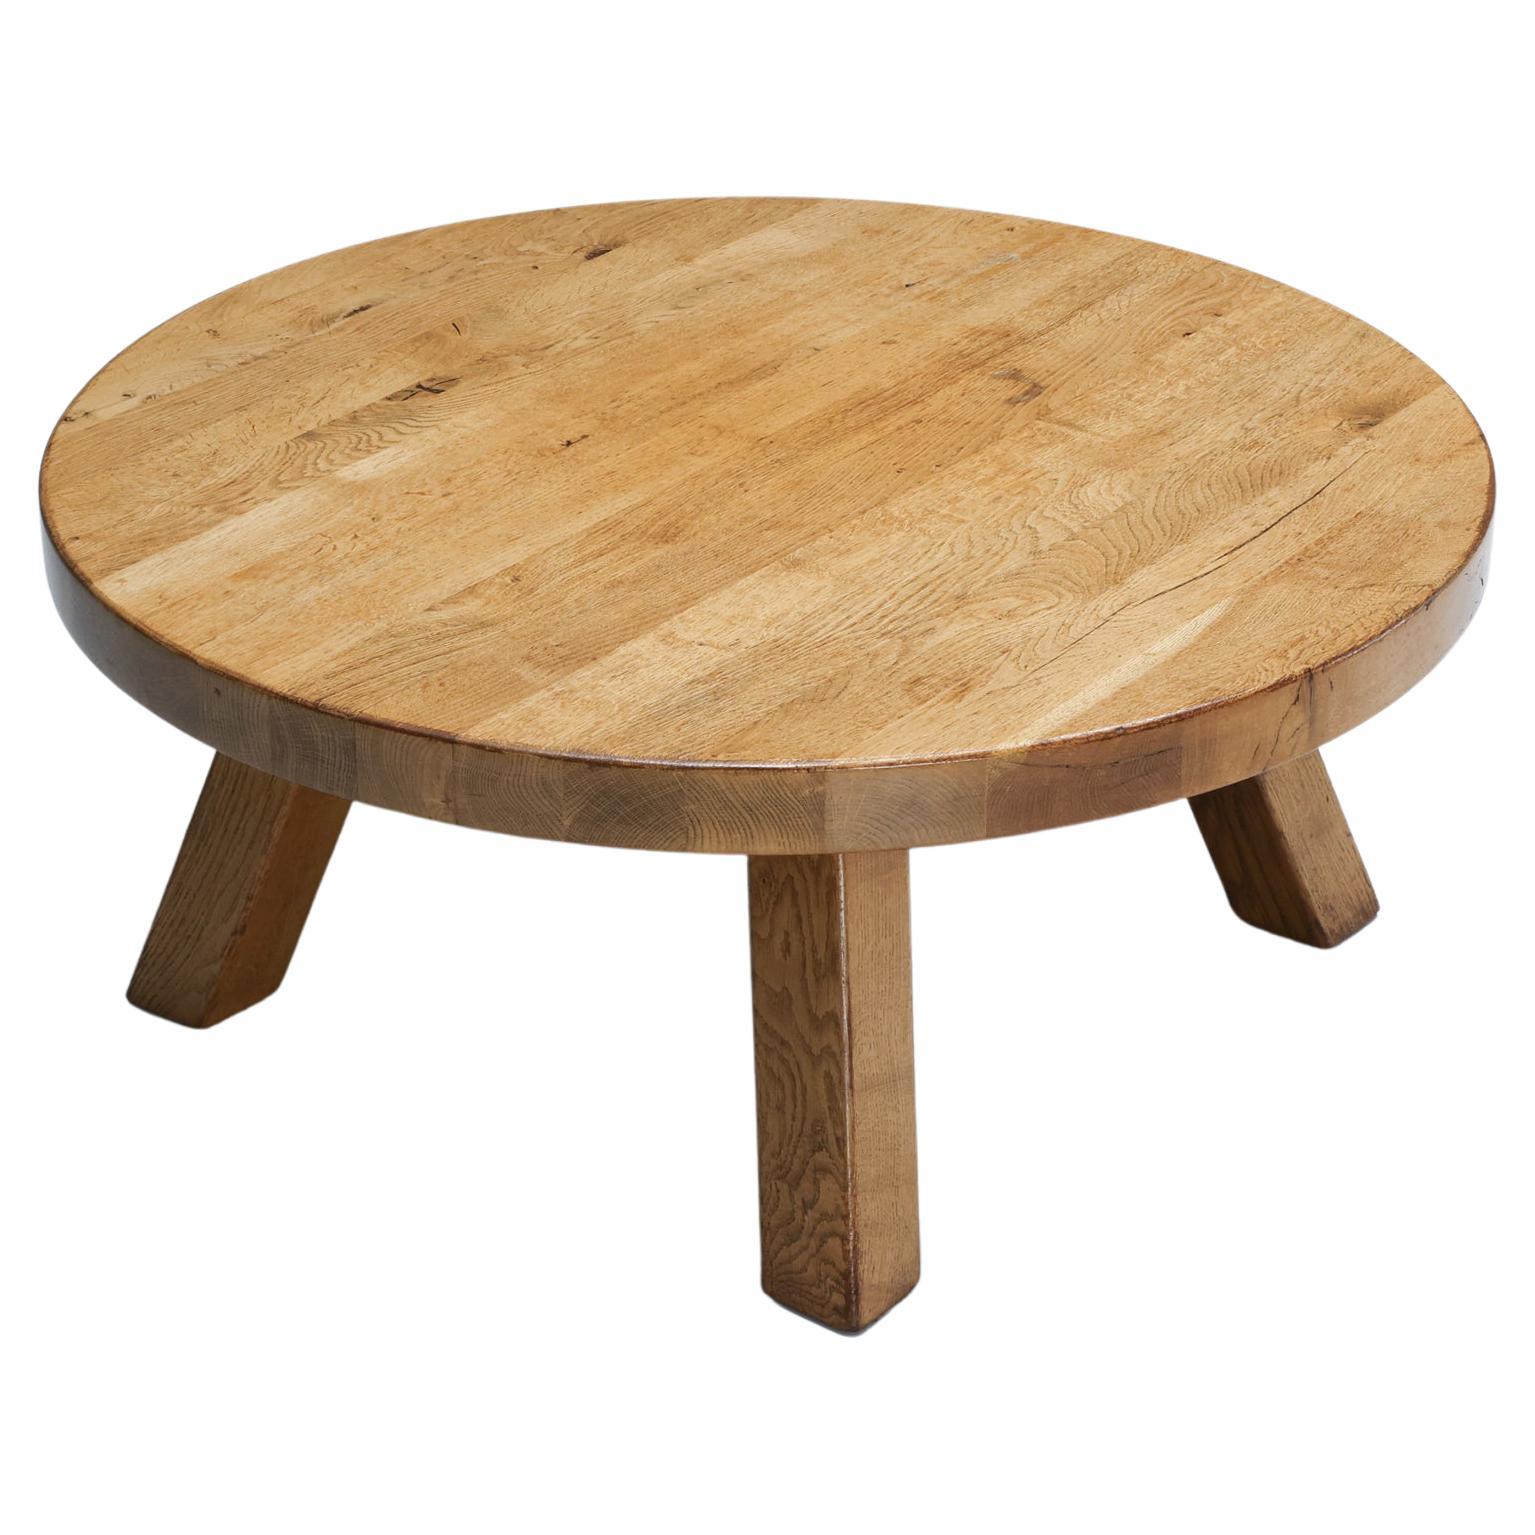 Rustic Wooden Round Coffee Table, Mid-Century Modern, Wabi-Sabi, 1950's